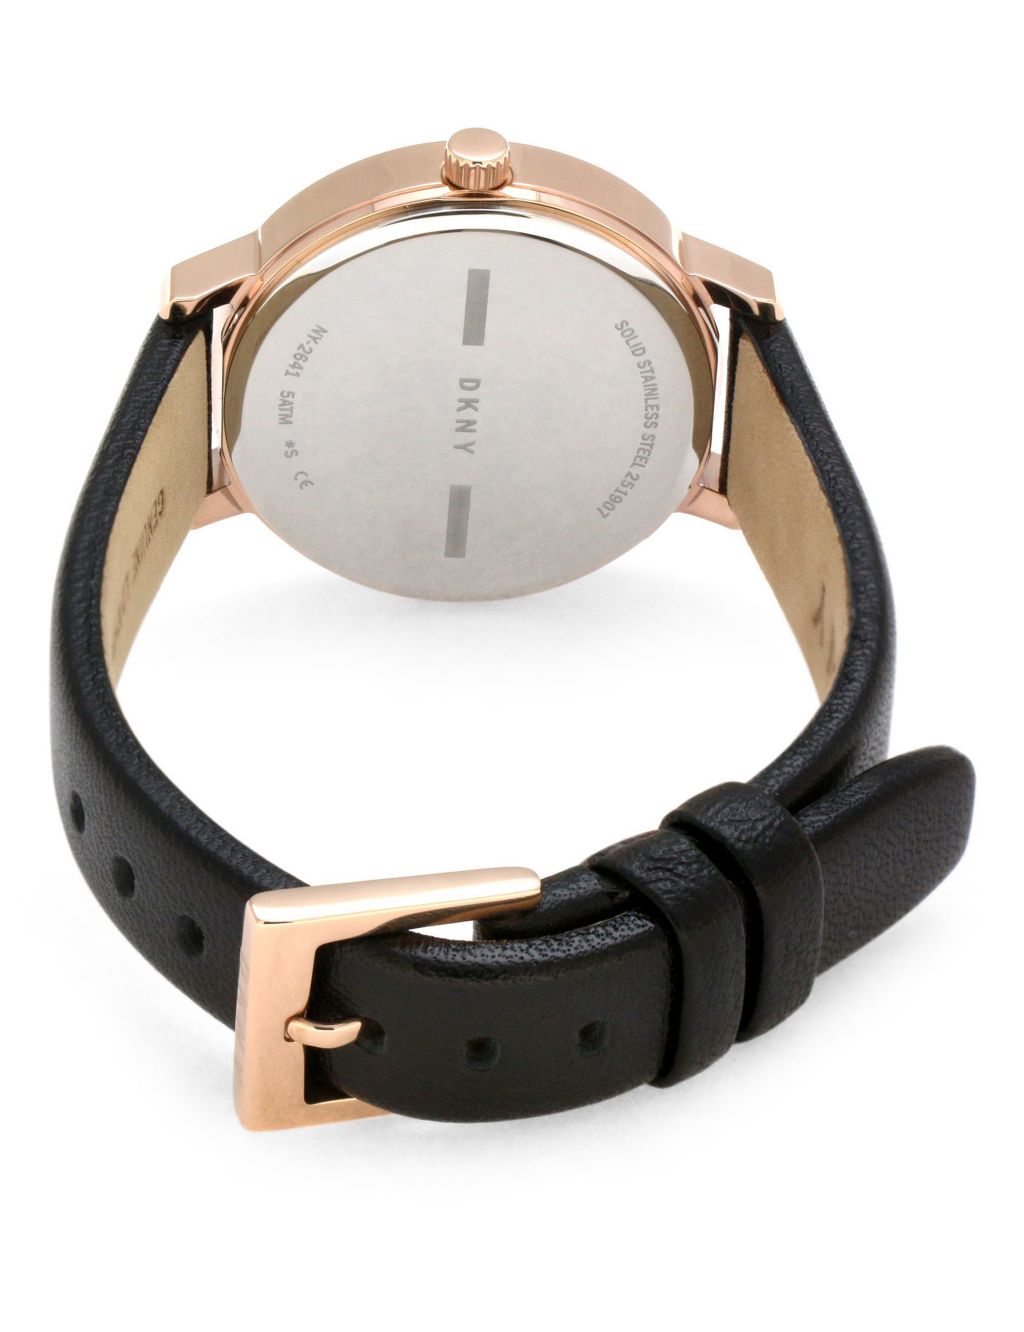 DKNY Modernist Black Leather Analogue Quartz Watch image 3